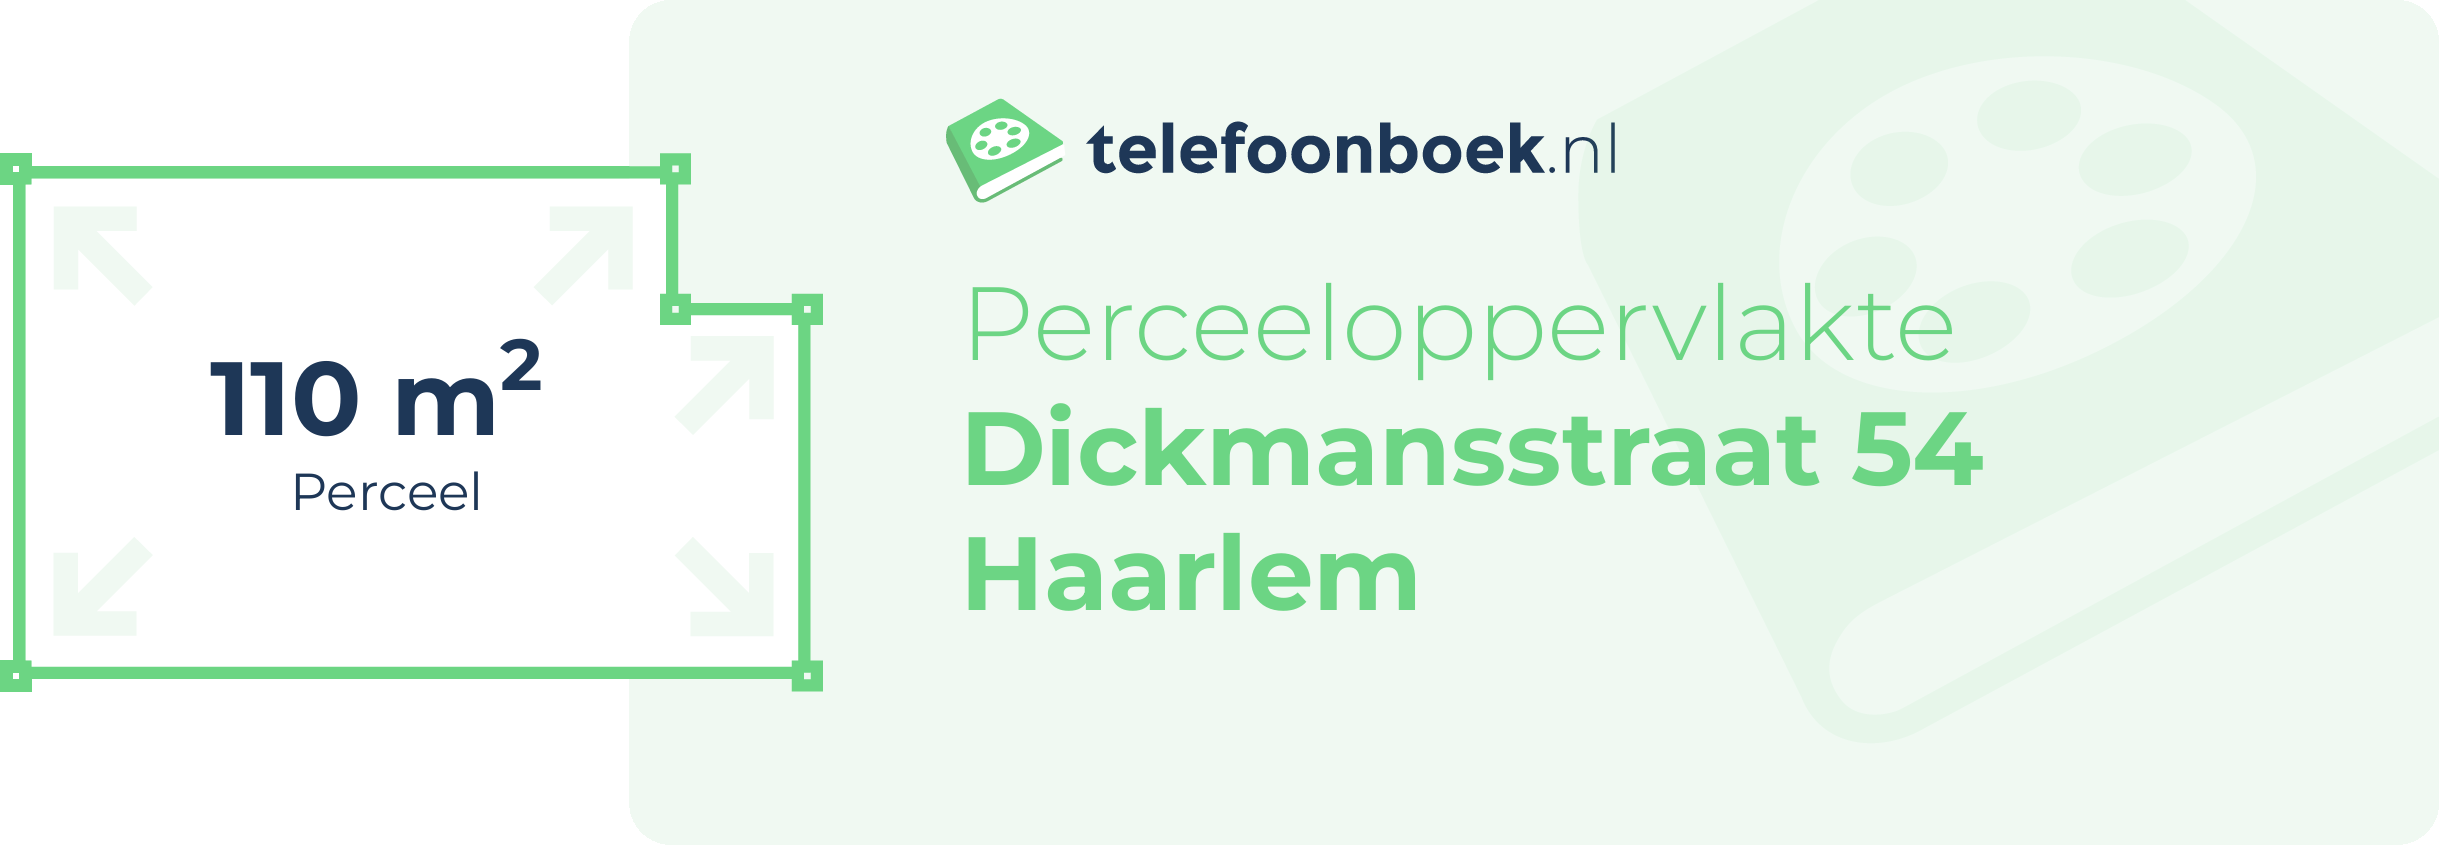 Perceeloppervlakte Dickmansstraat 54 Haarlem